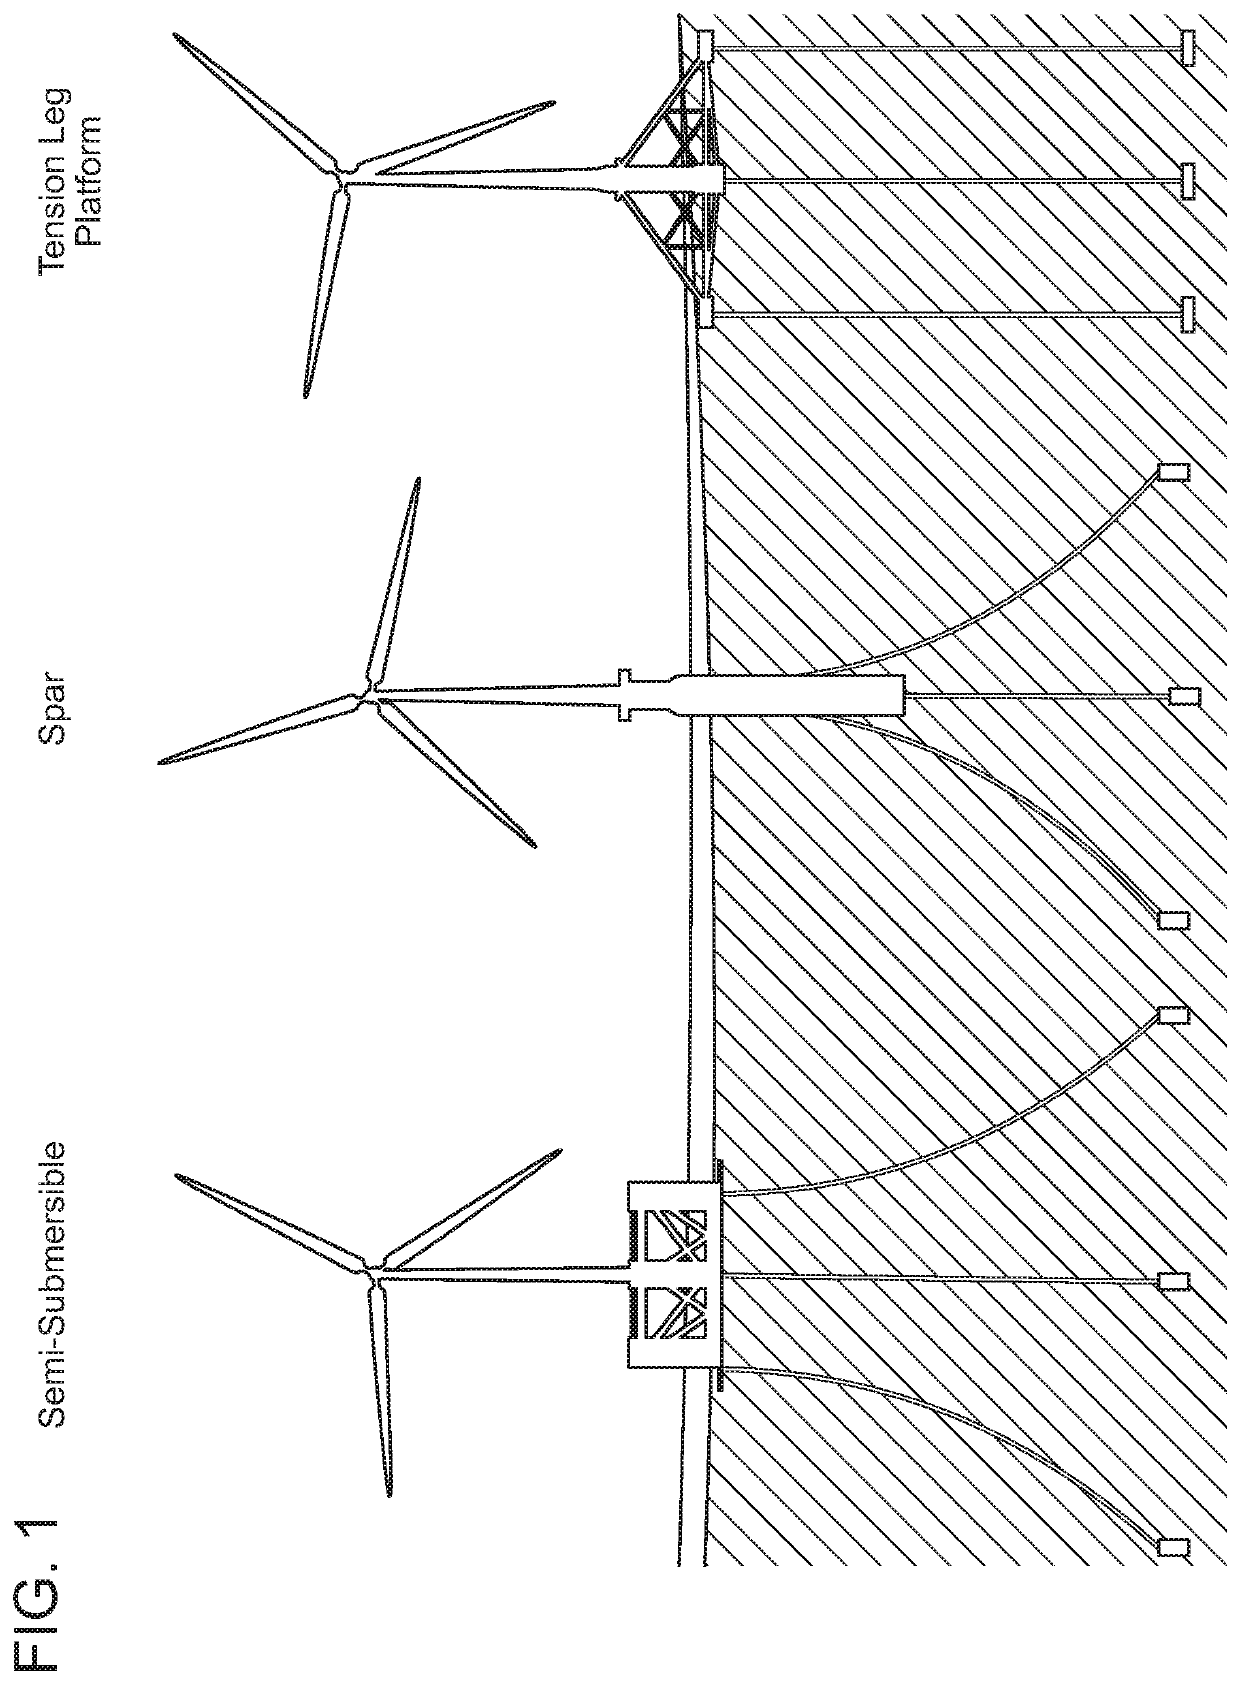 Cantilevered tension-leg stabilization of buoyant wave energy converter or floating wind turbine base